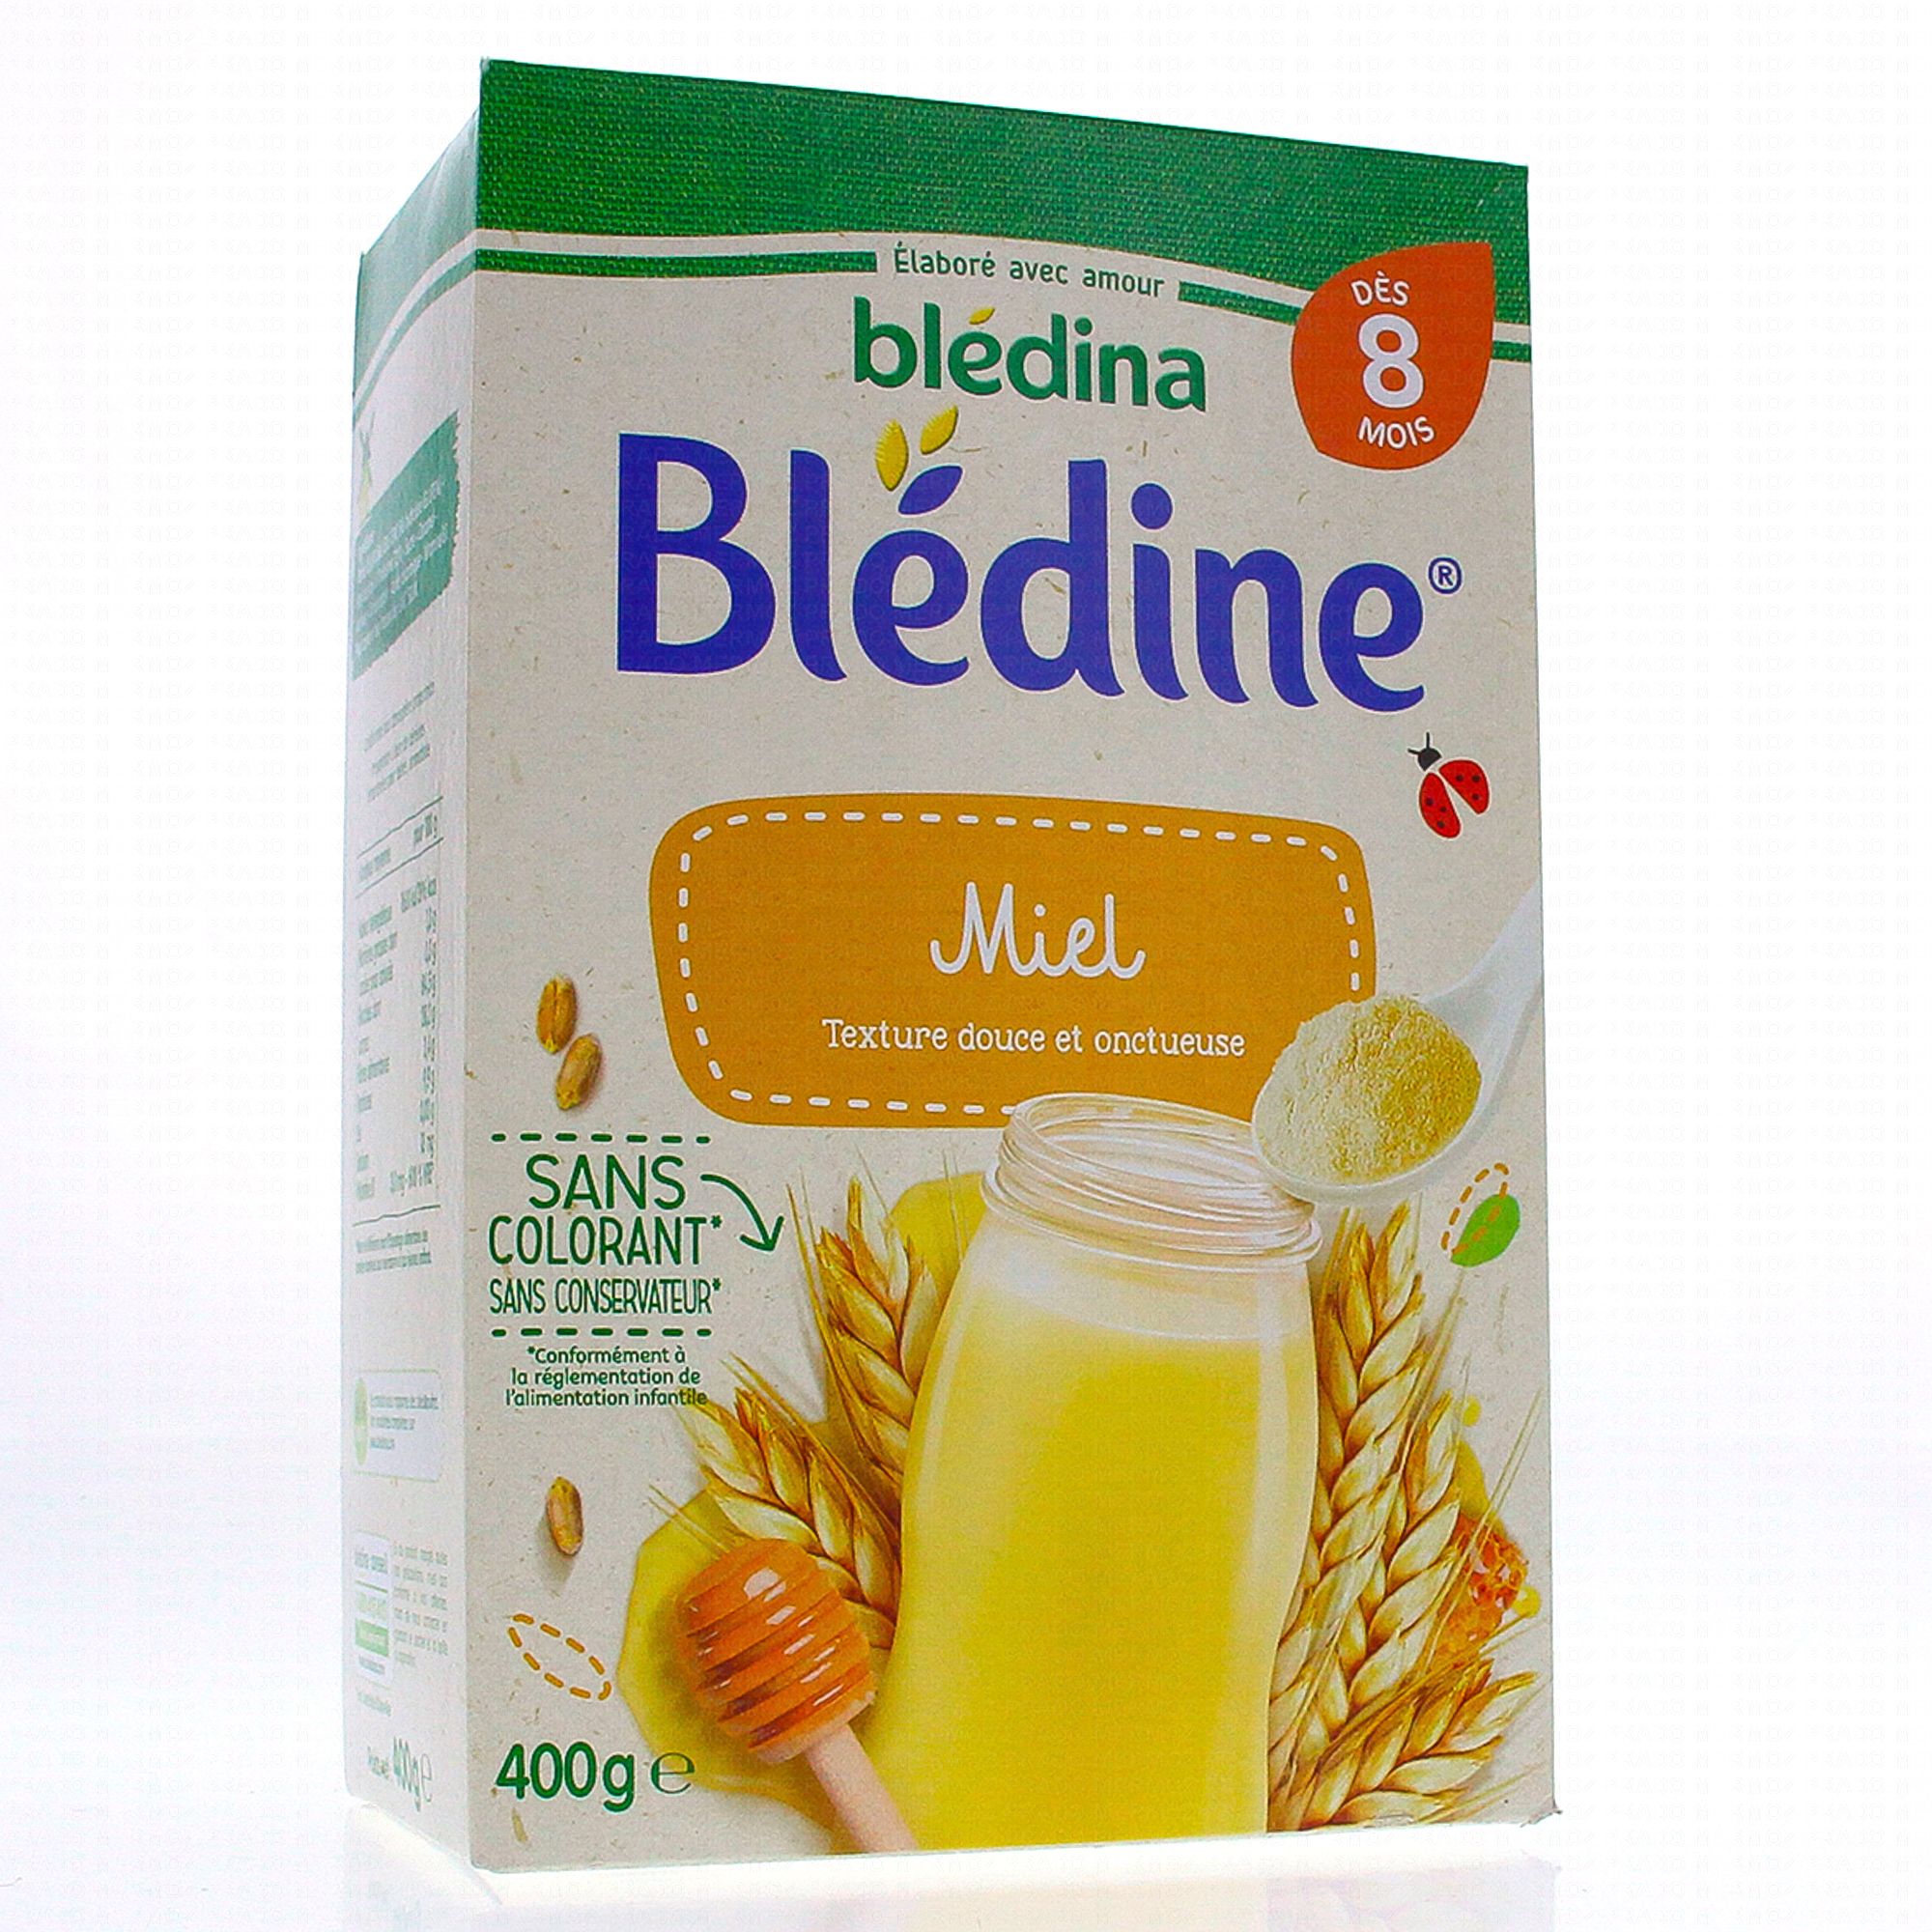 Blédina Bledine Cereales Saveur Miel Des 8 Mois 400g - Easypara